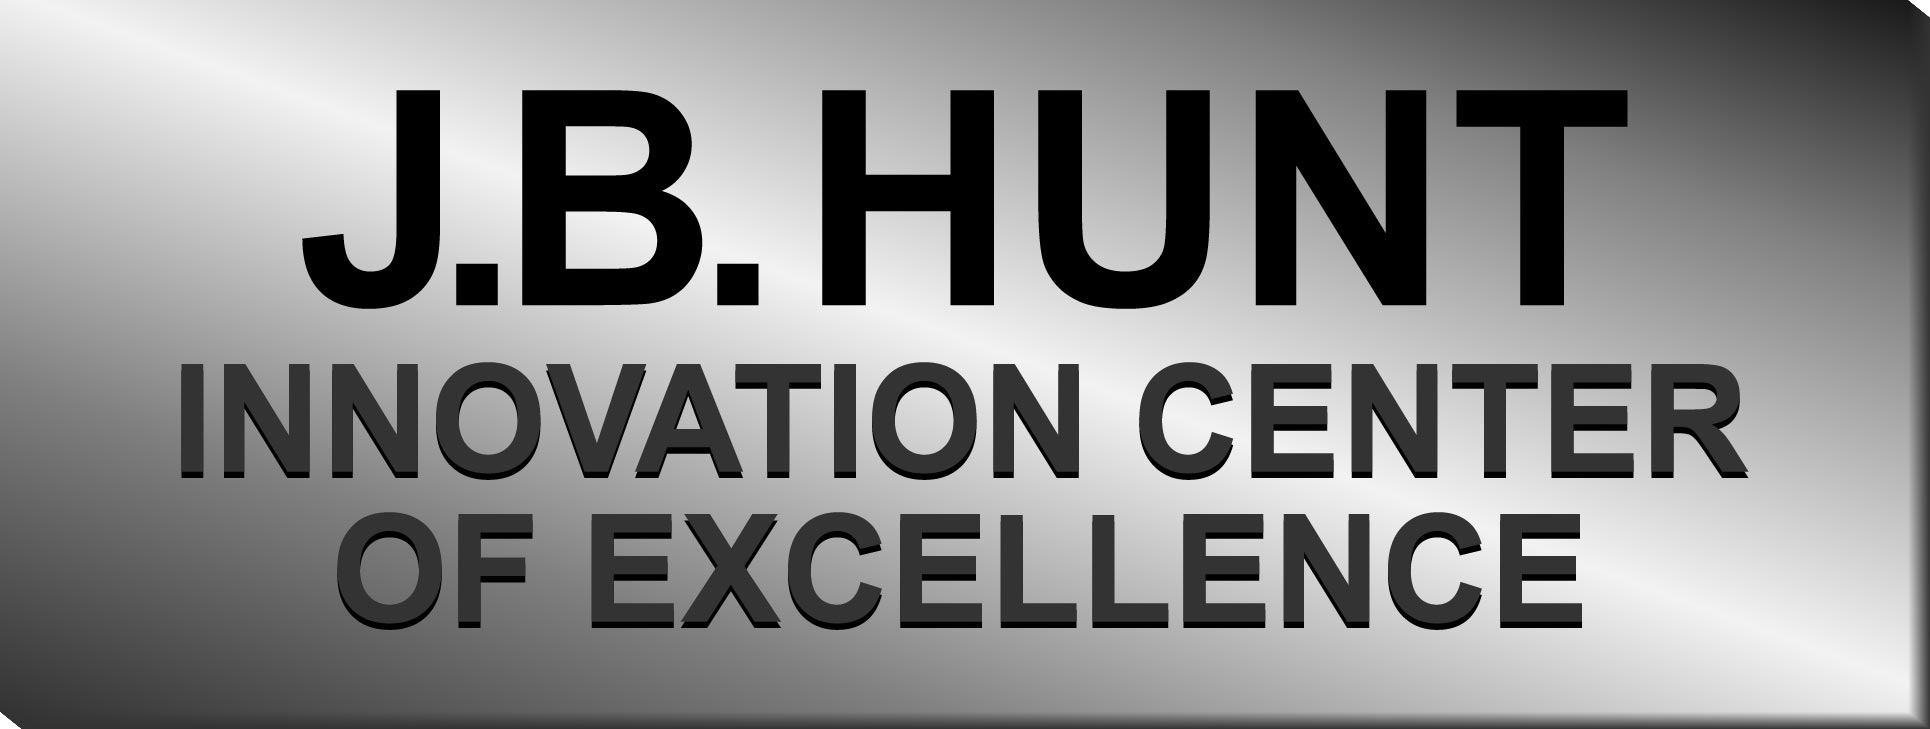 J.B. Hunt Innovation Center of Excellence logo